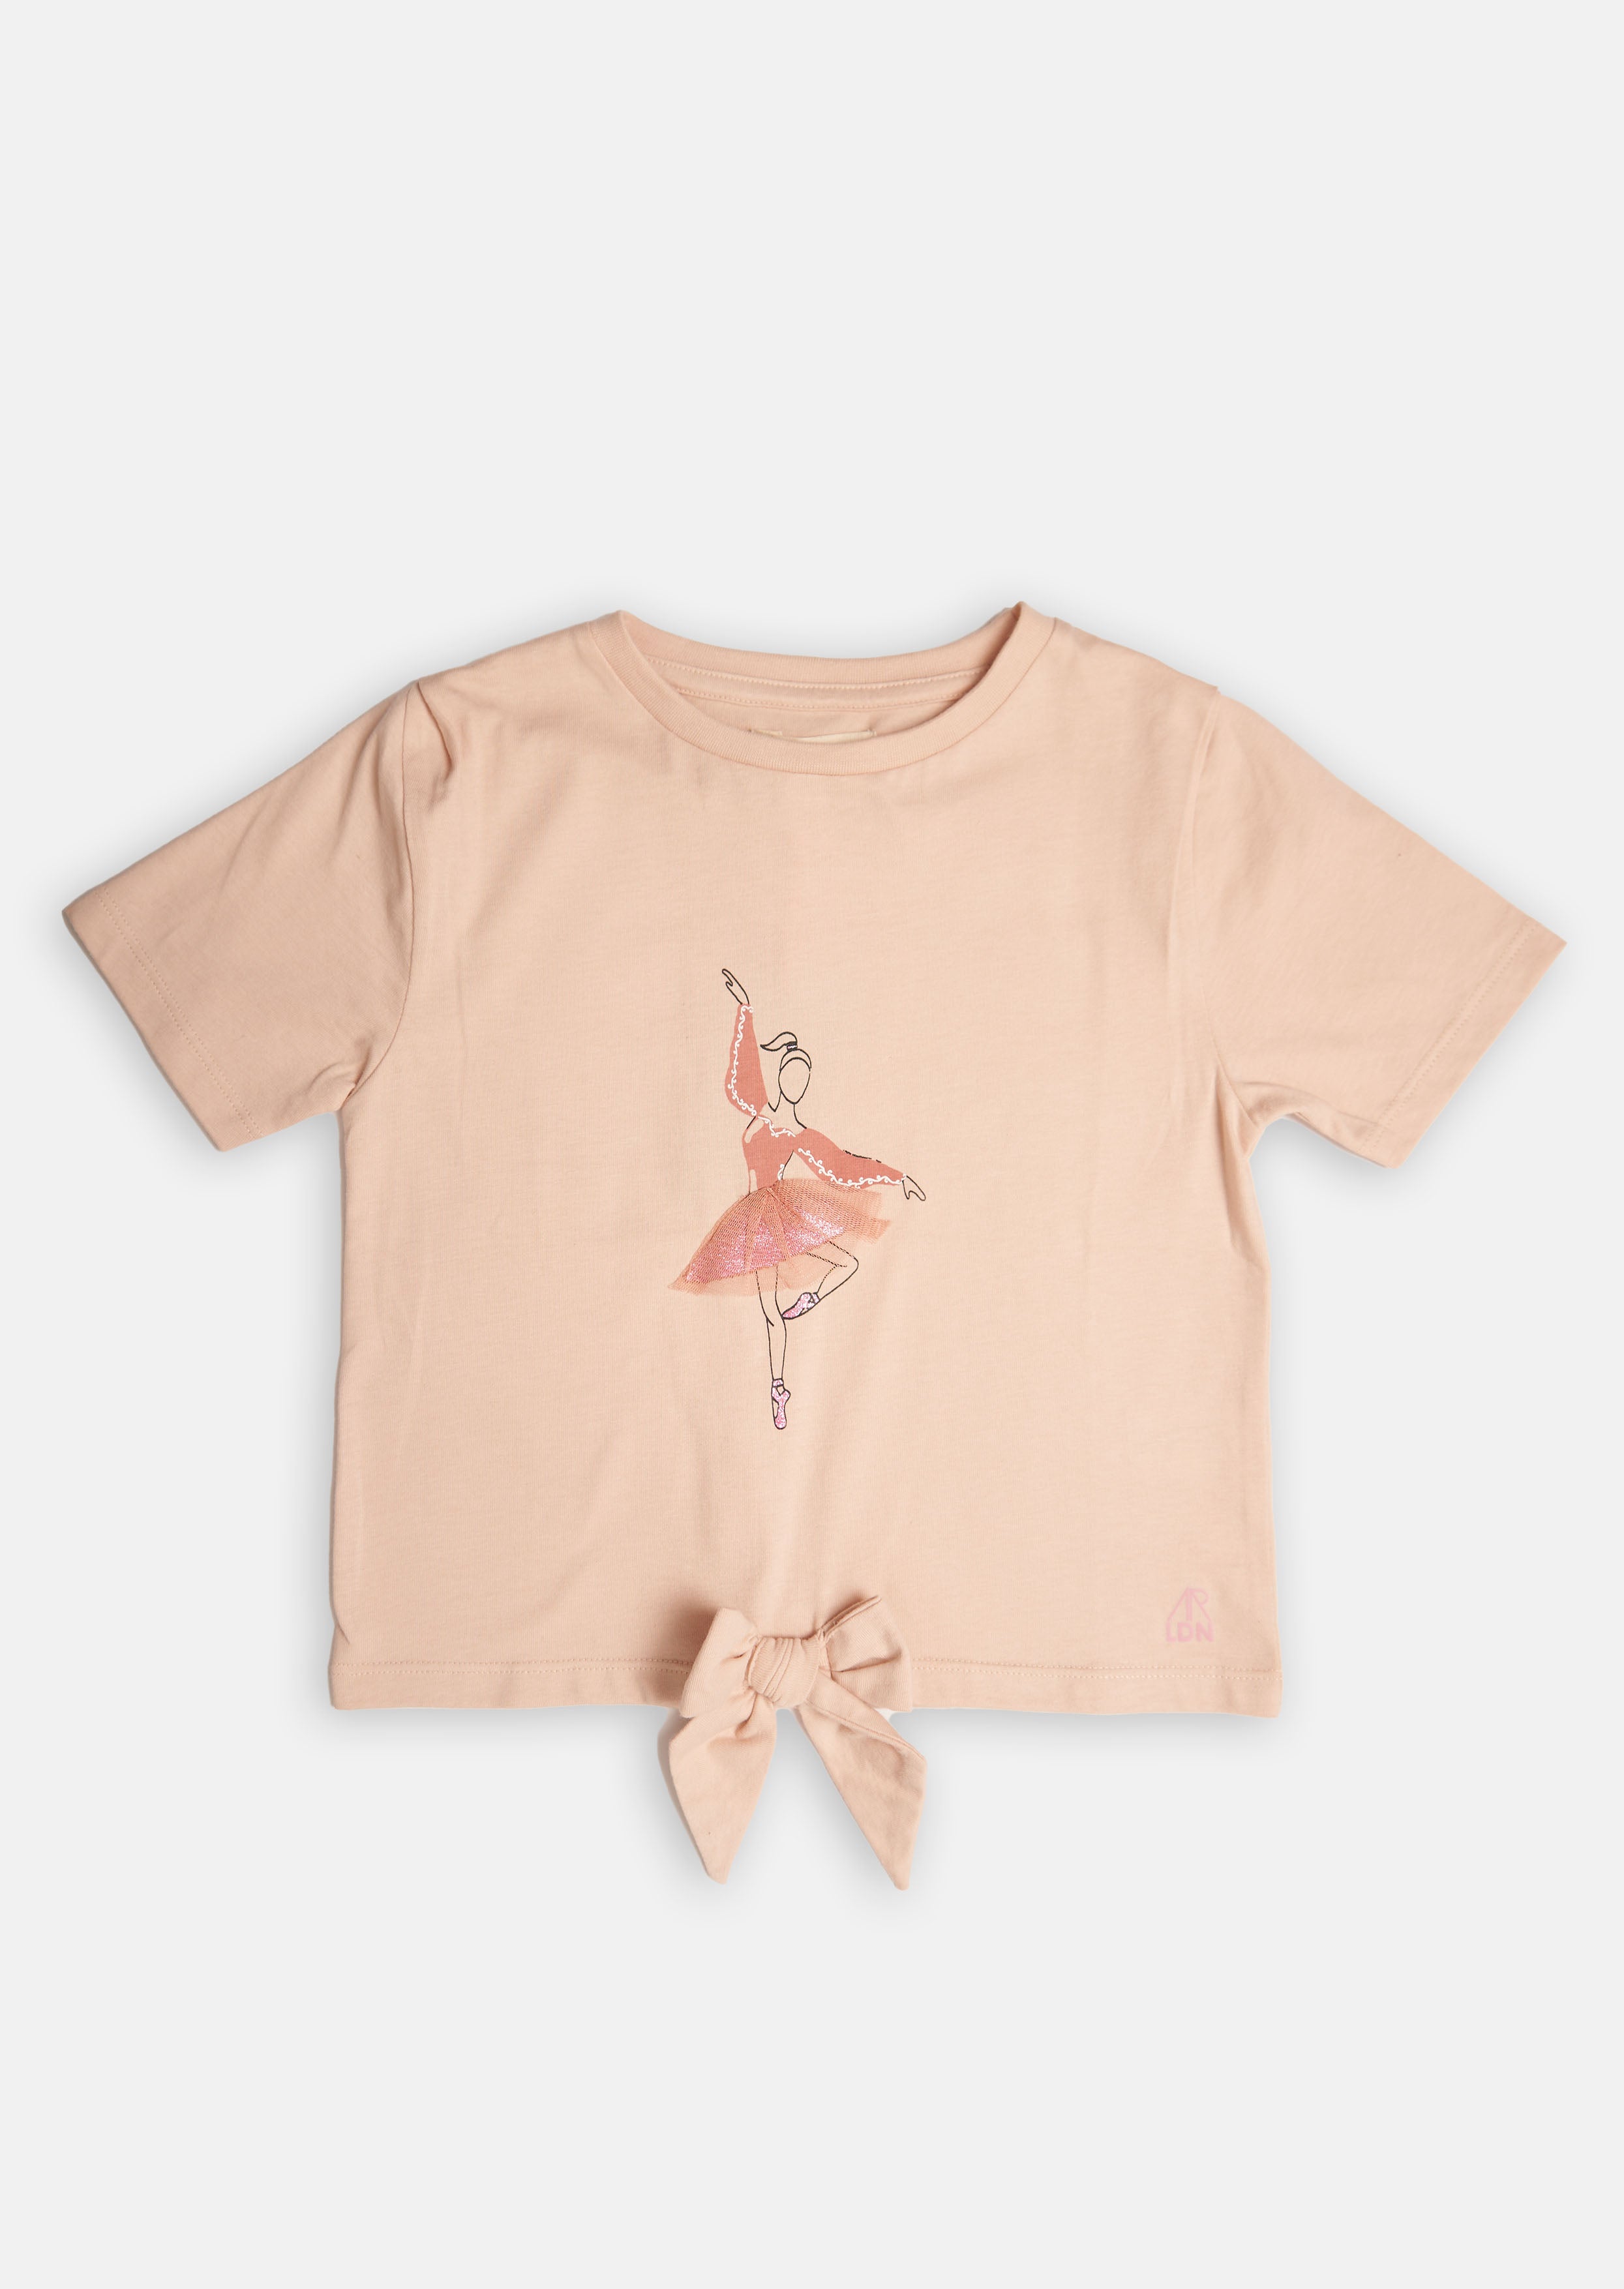 Girls Dance Printed Cotton Beige T-Shirt